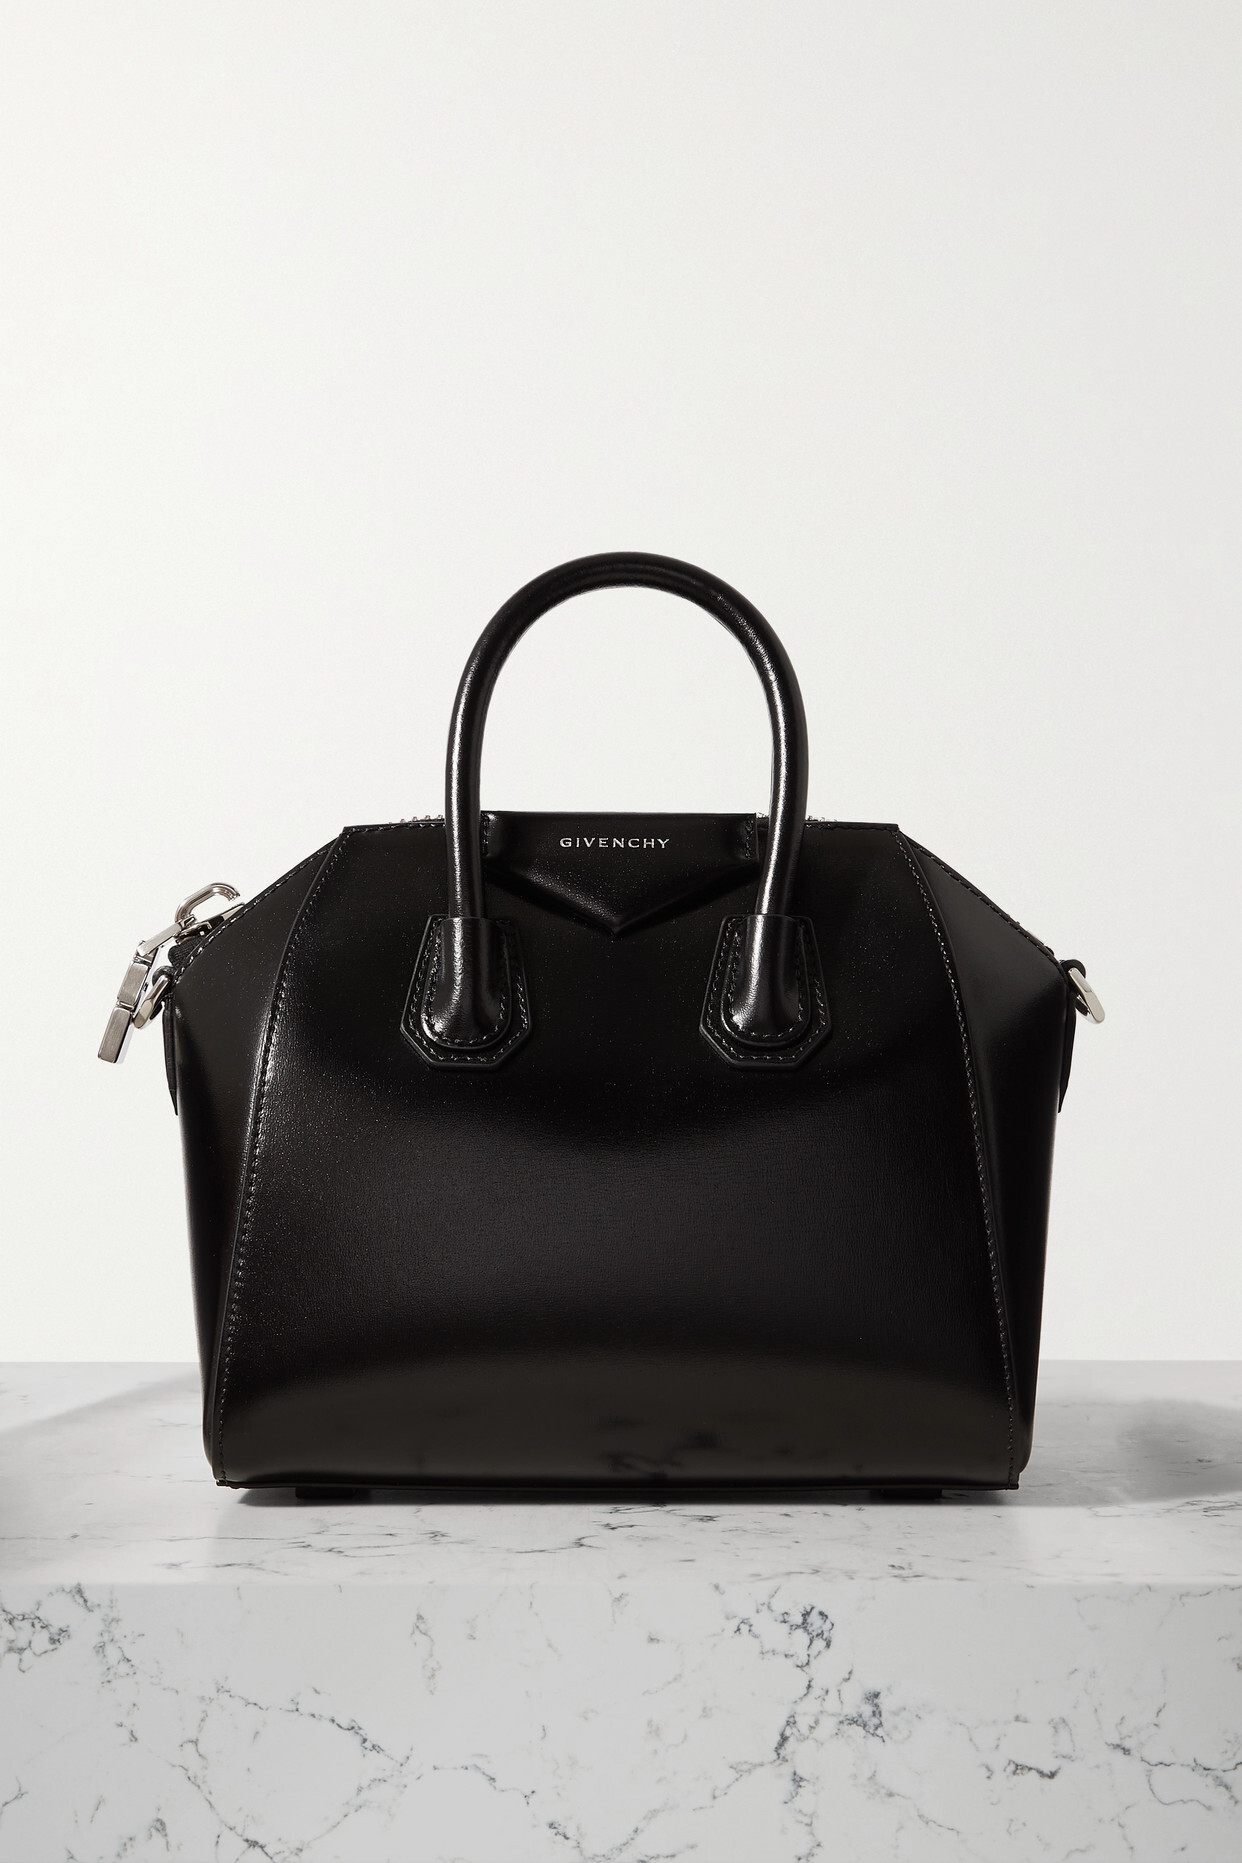 Givenchy - Antigona Mini Glossed-leather Tote - Black